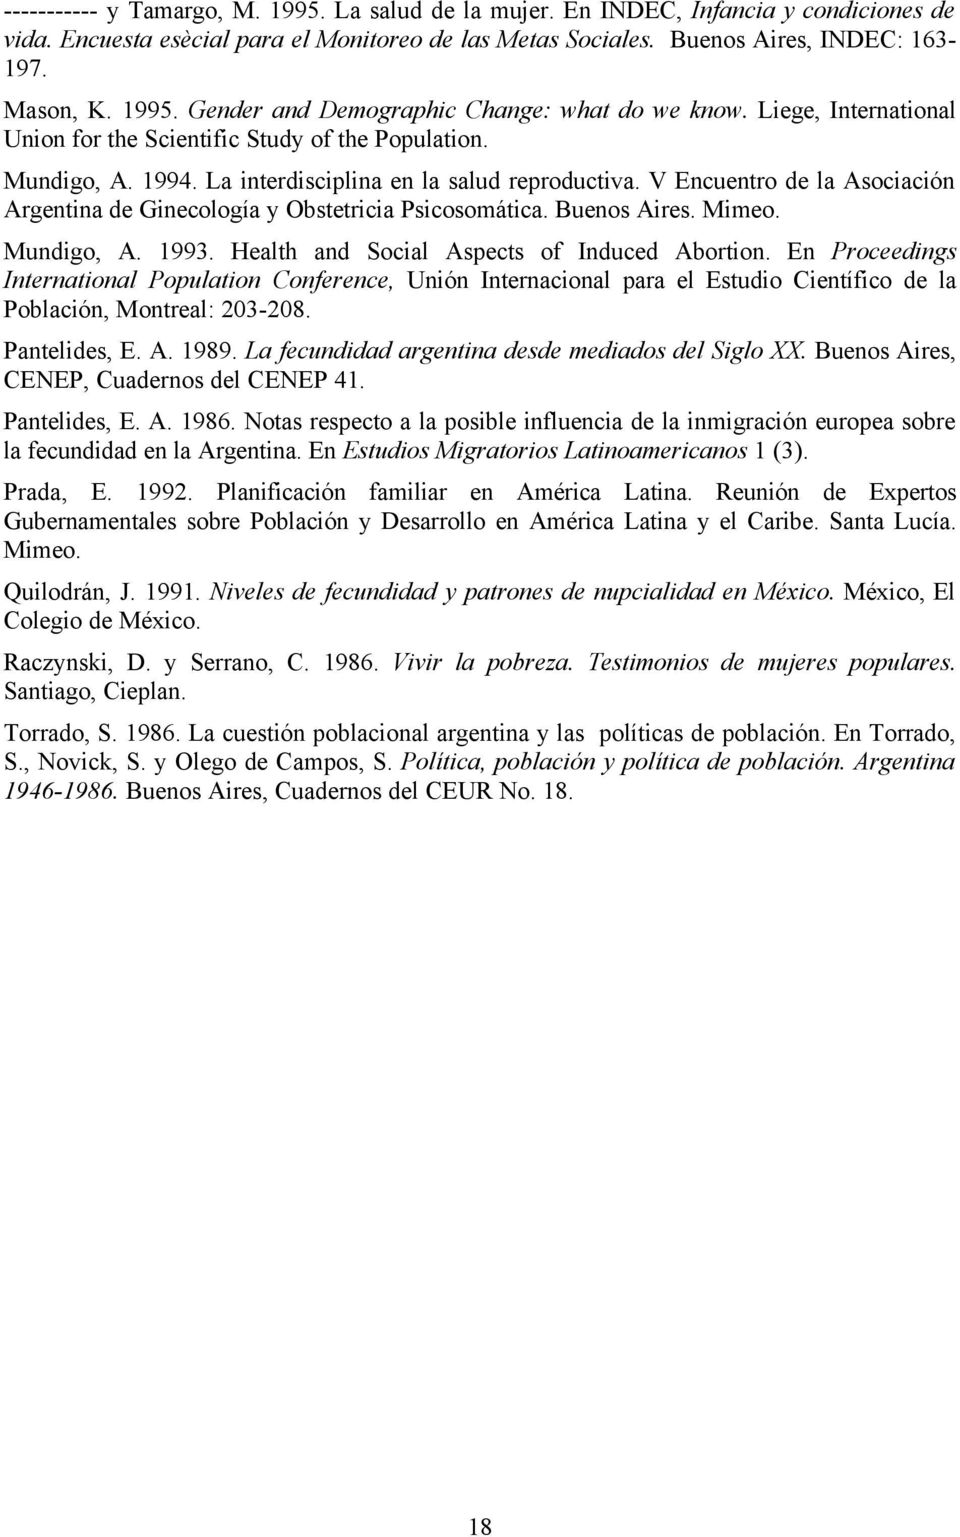 V Encuentro de la Asociación Argentina de Ginecología y Obstetricia Psicosomática. Buenos Aires. Mimeo. Mundigo, A. 1993. Health and Social Aspects of Induced Abortion.